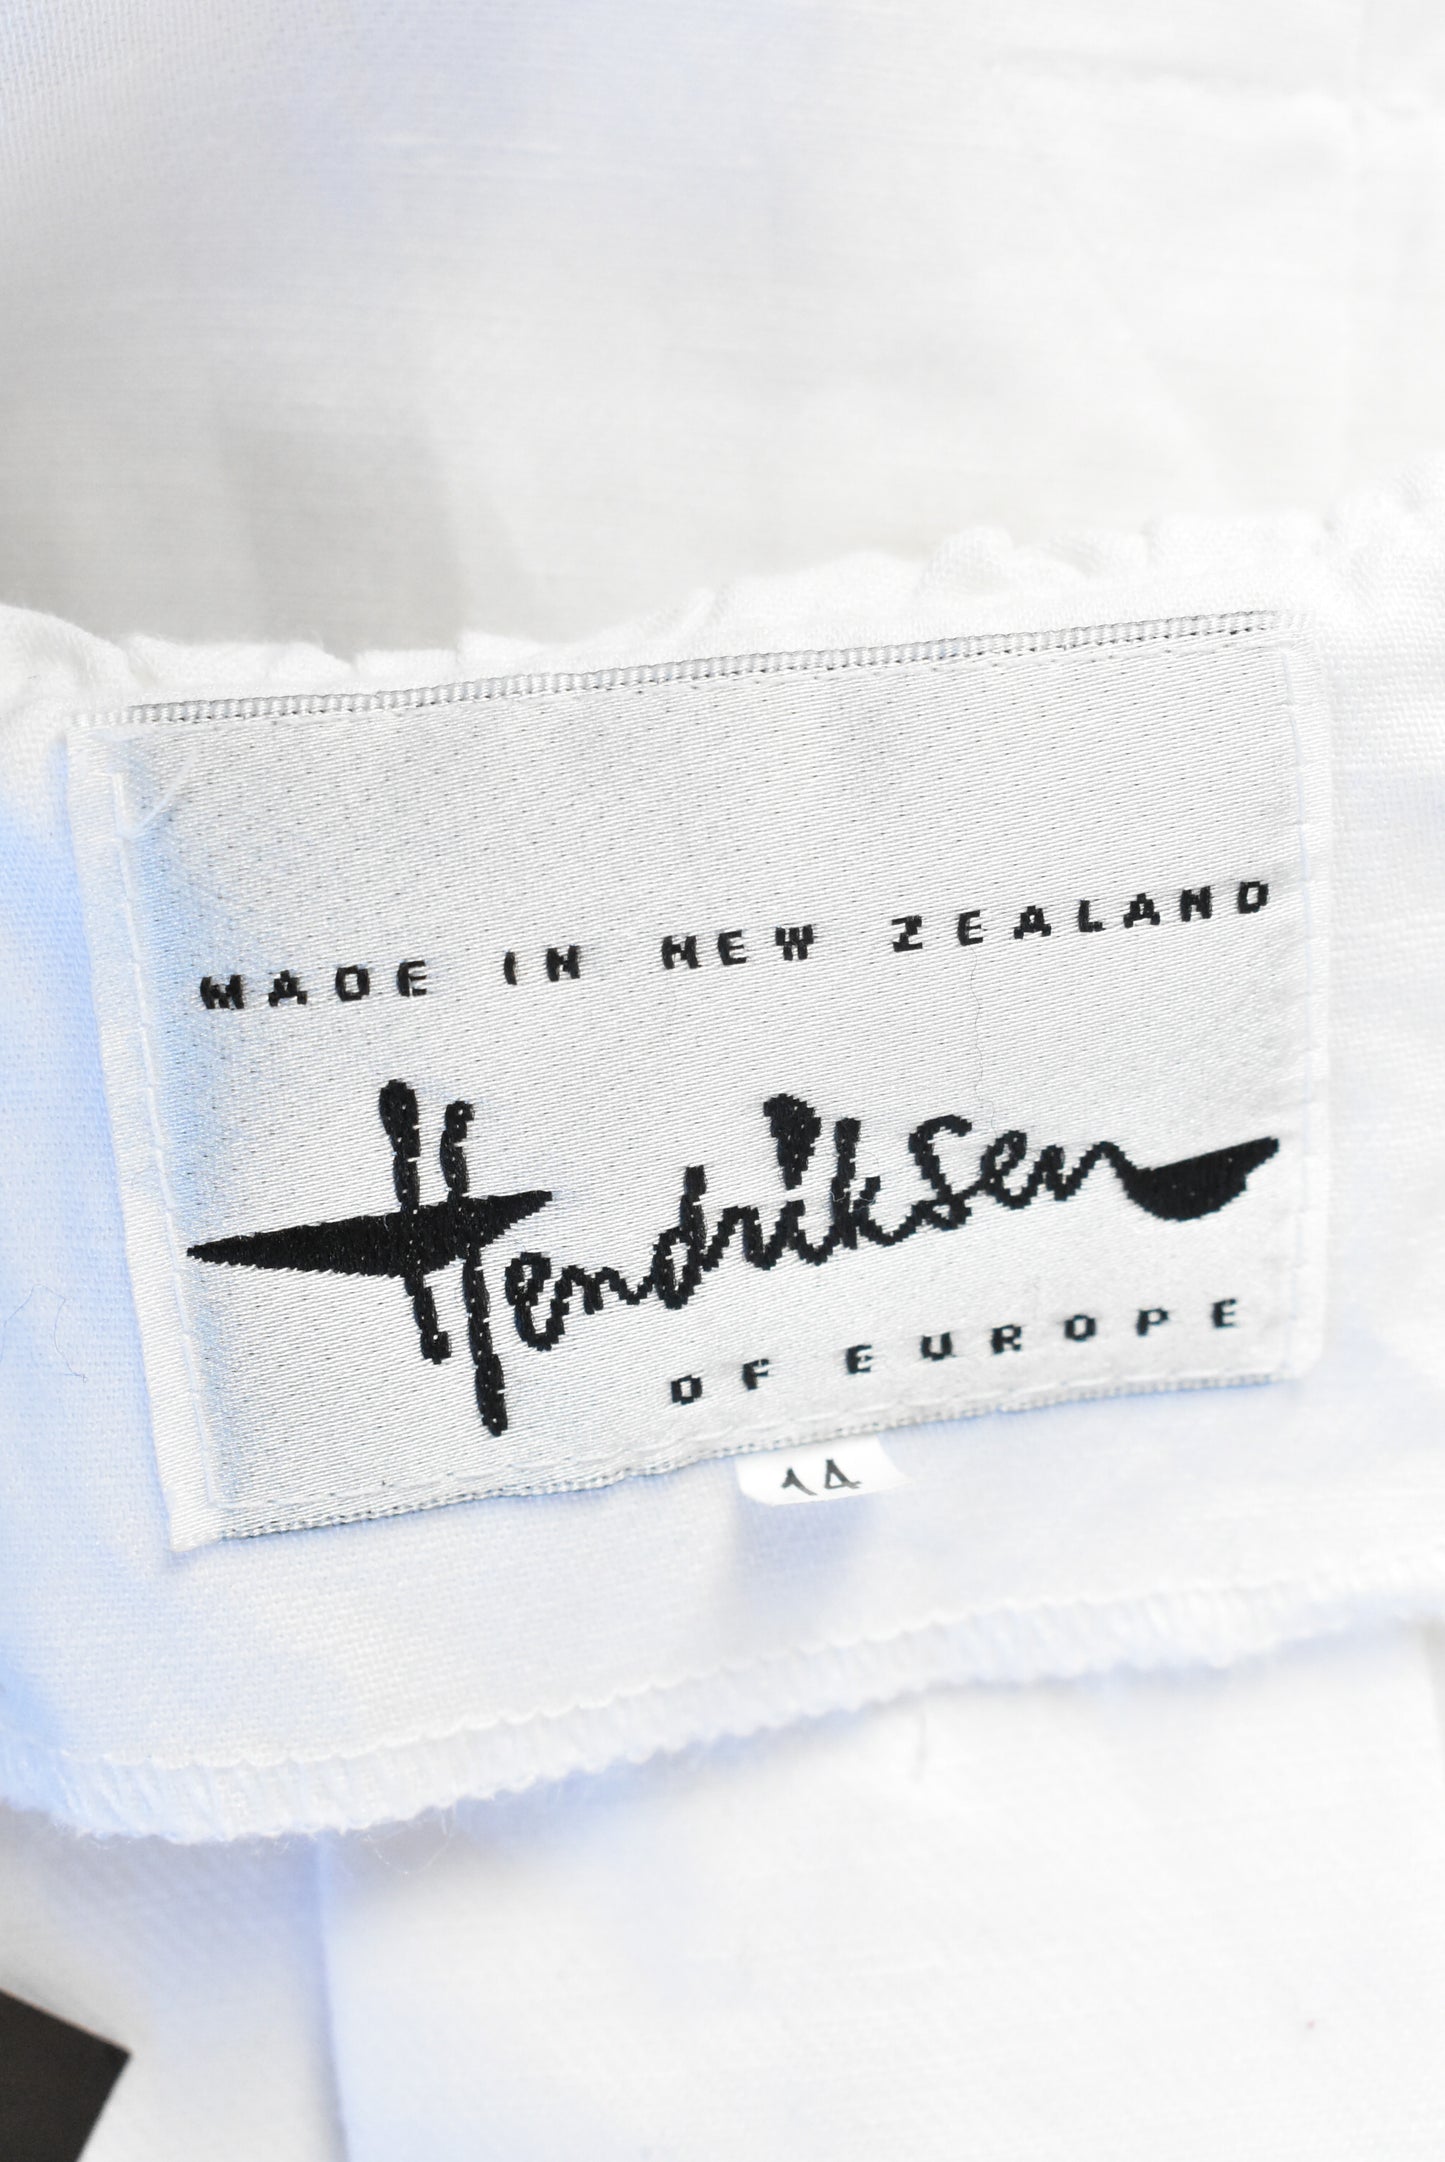 Hendriksen white collared light jacket, 14